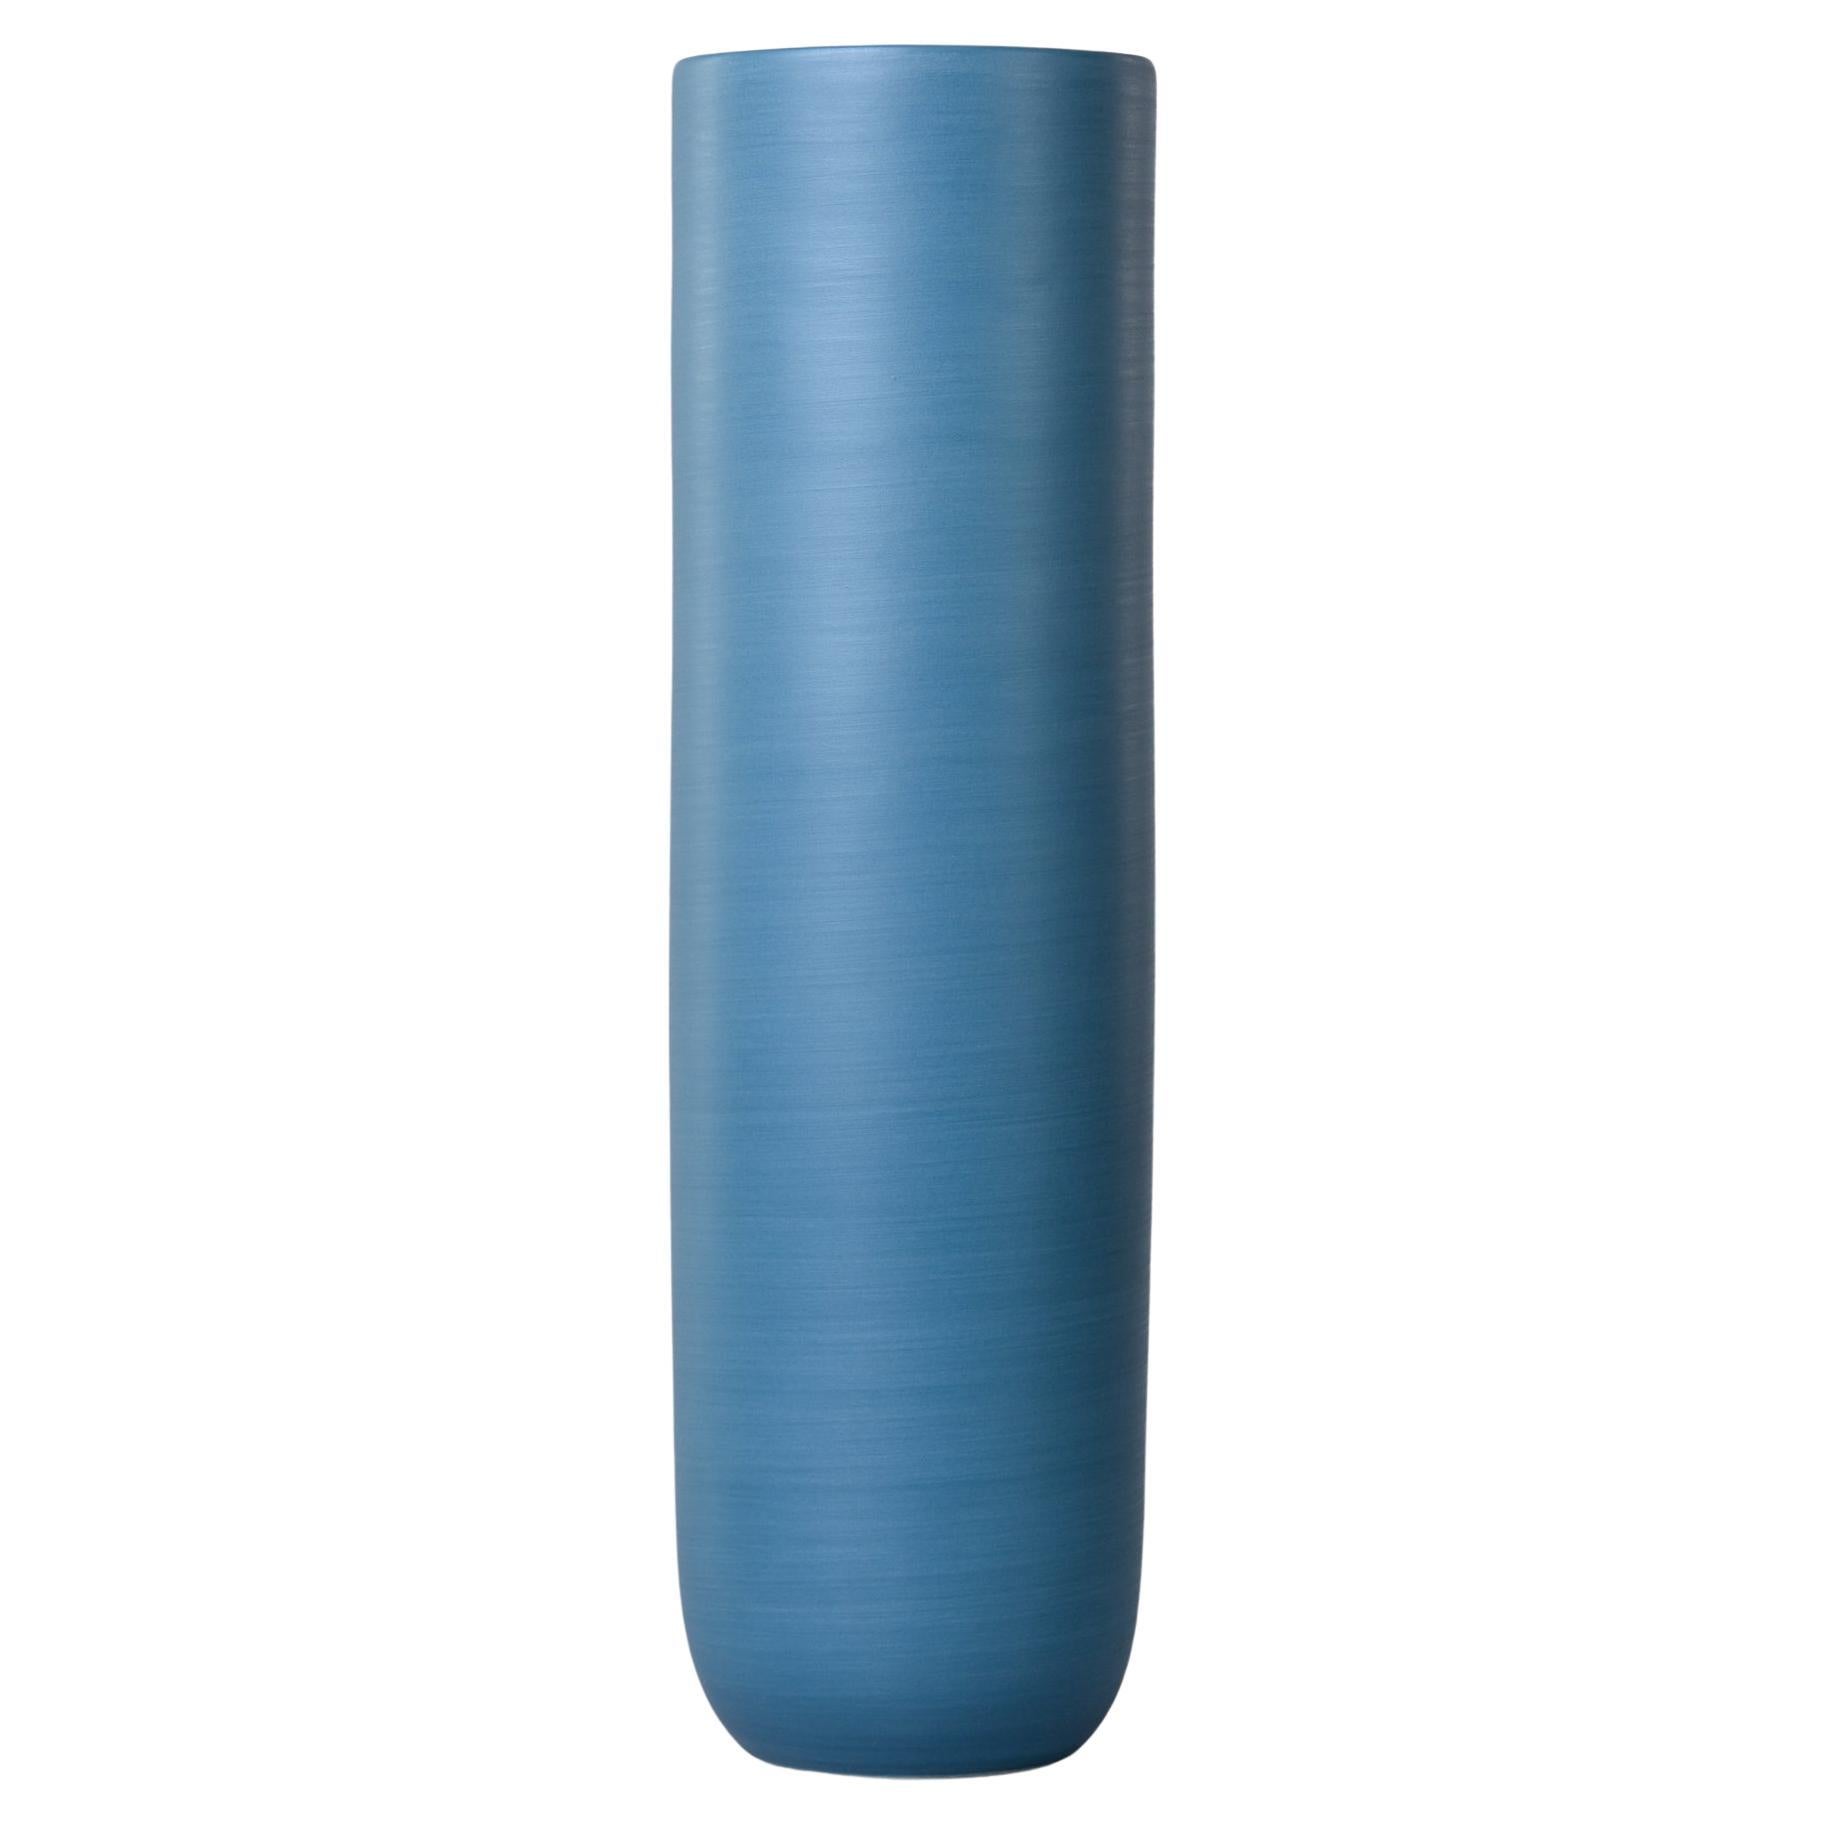 Nouveau vase Rina Menardi Canna 2 en bleu sarcelle